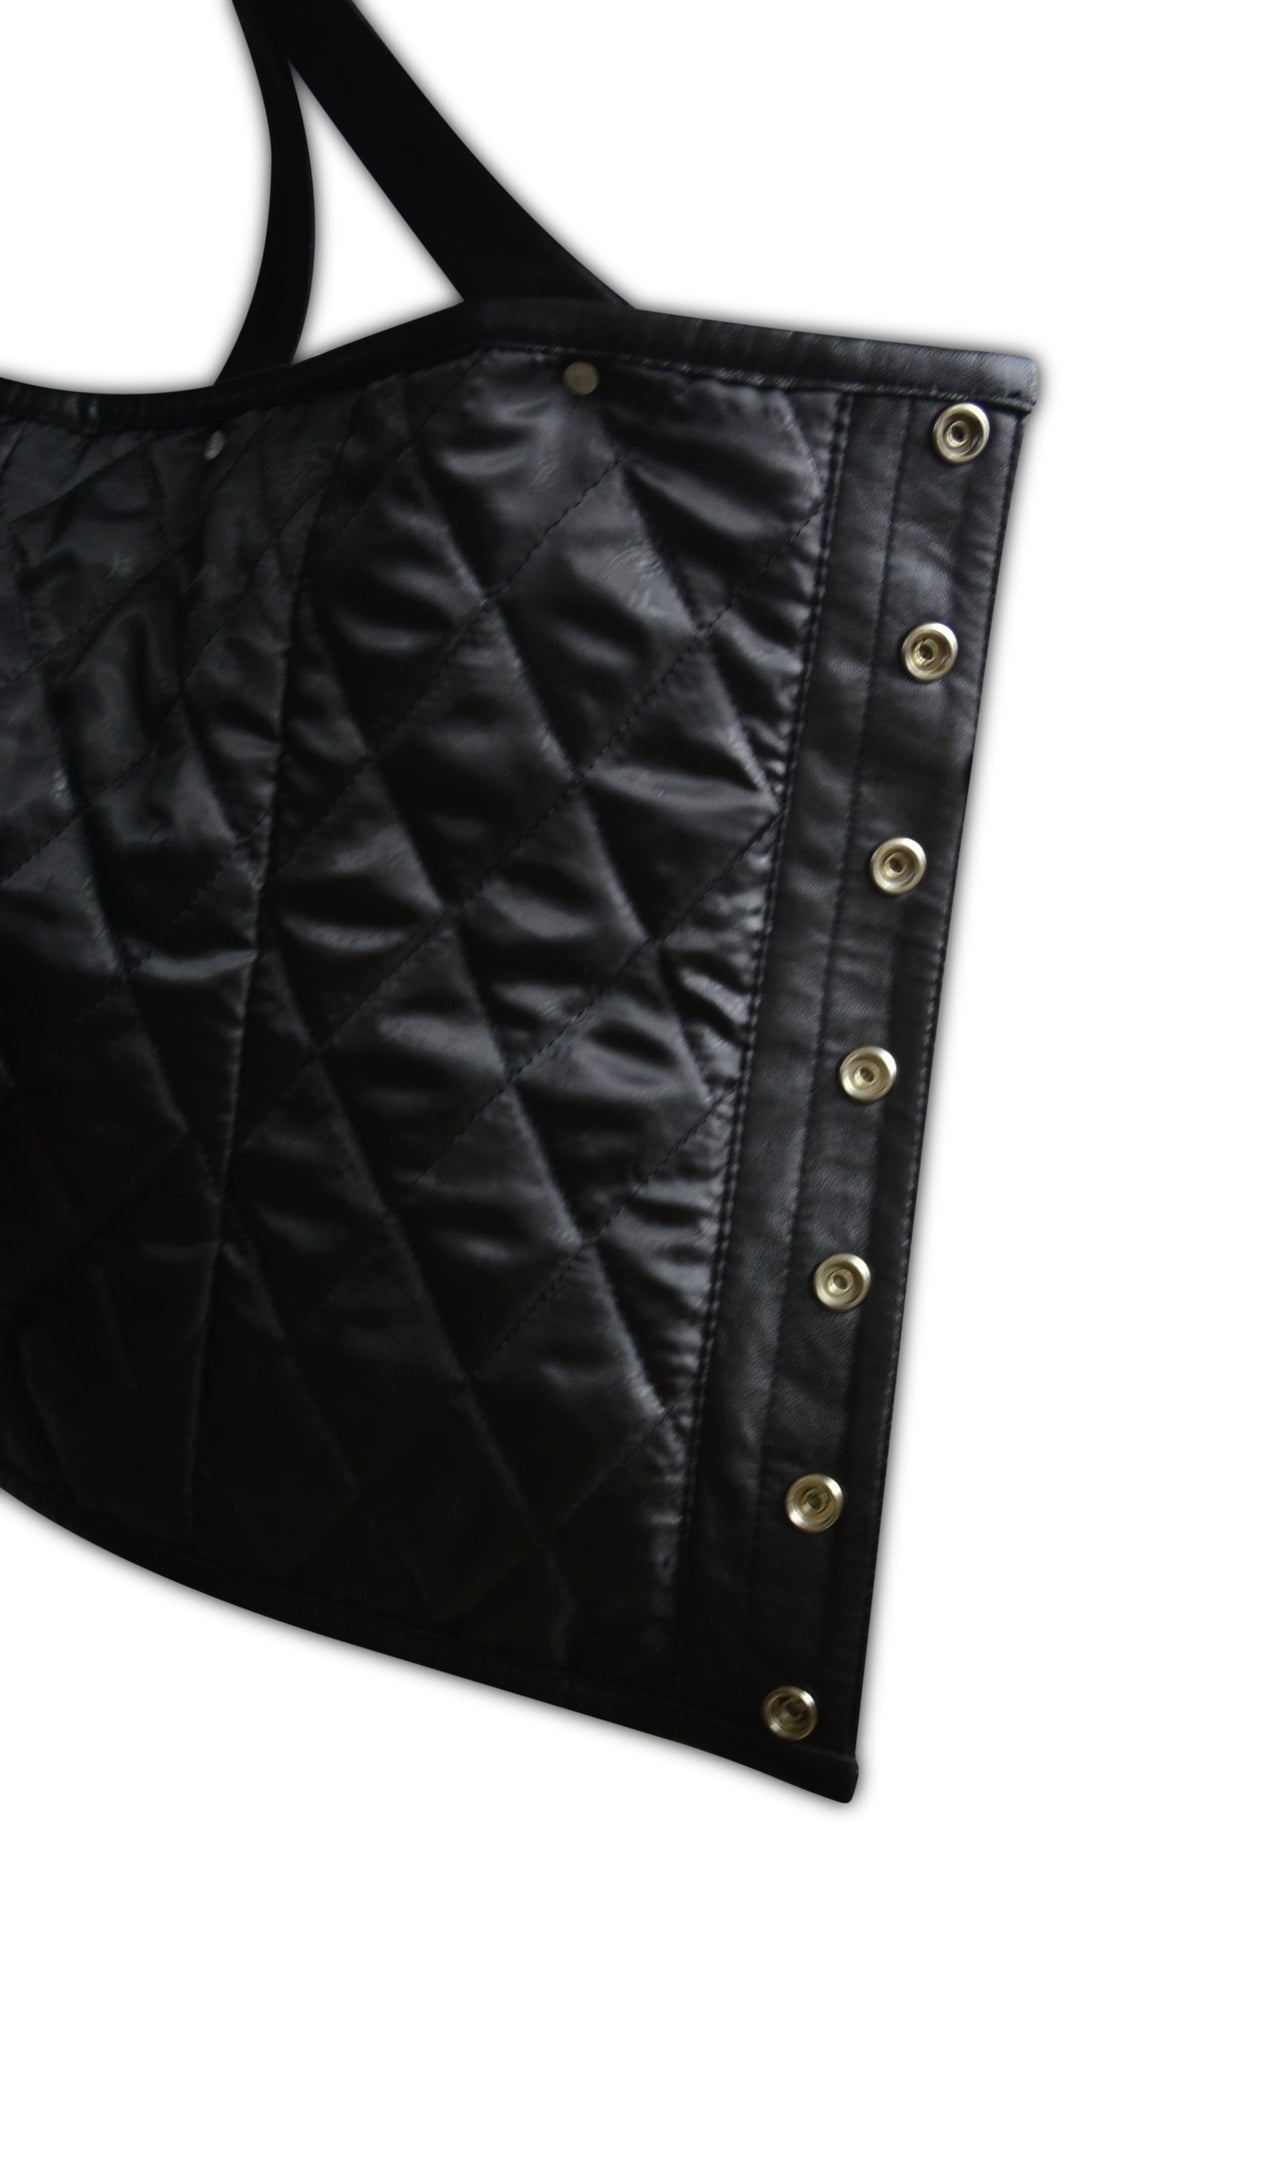 Mens Black Rapper Style Strap Lambskin Leather Vest (CL-04)